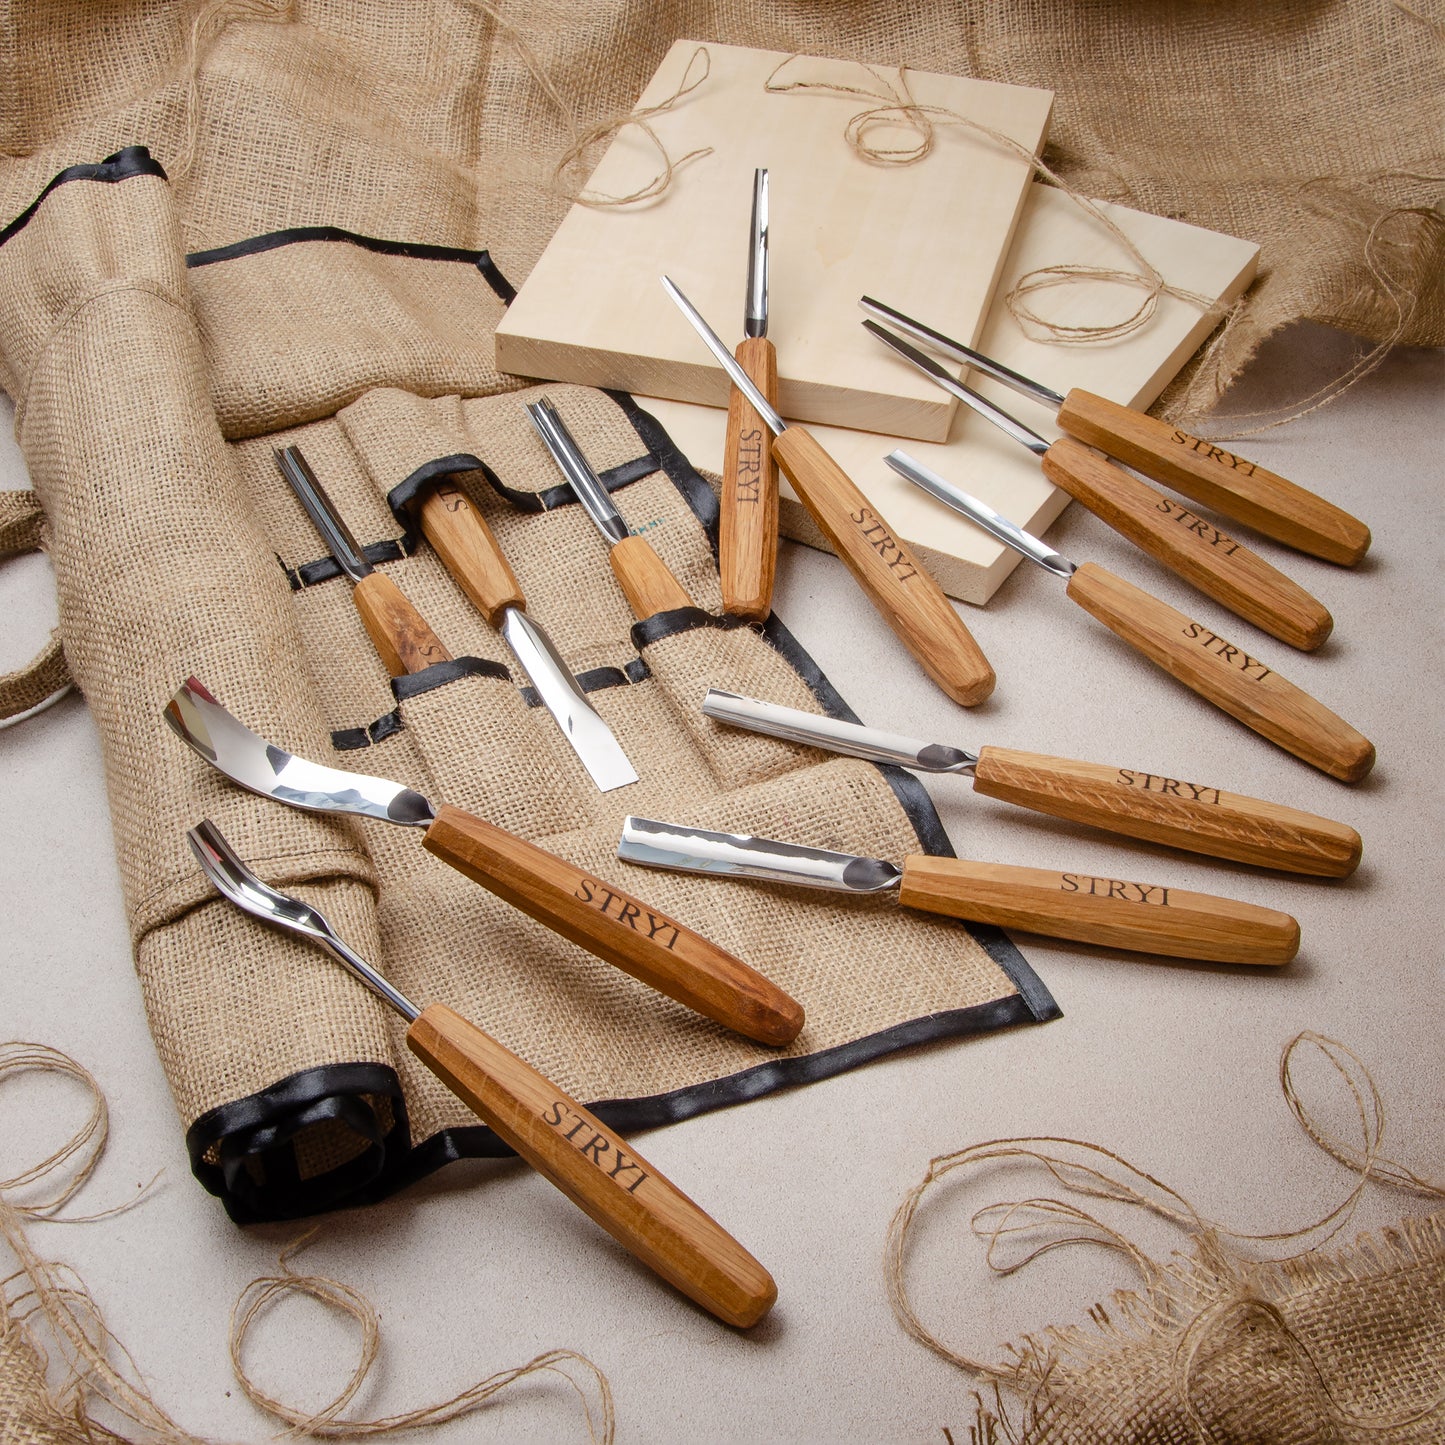 Wood carving tools set for relief carving 12pcs STRYI Profi, Gouges set, Chisels set, Gift for carver